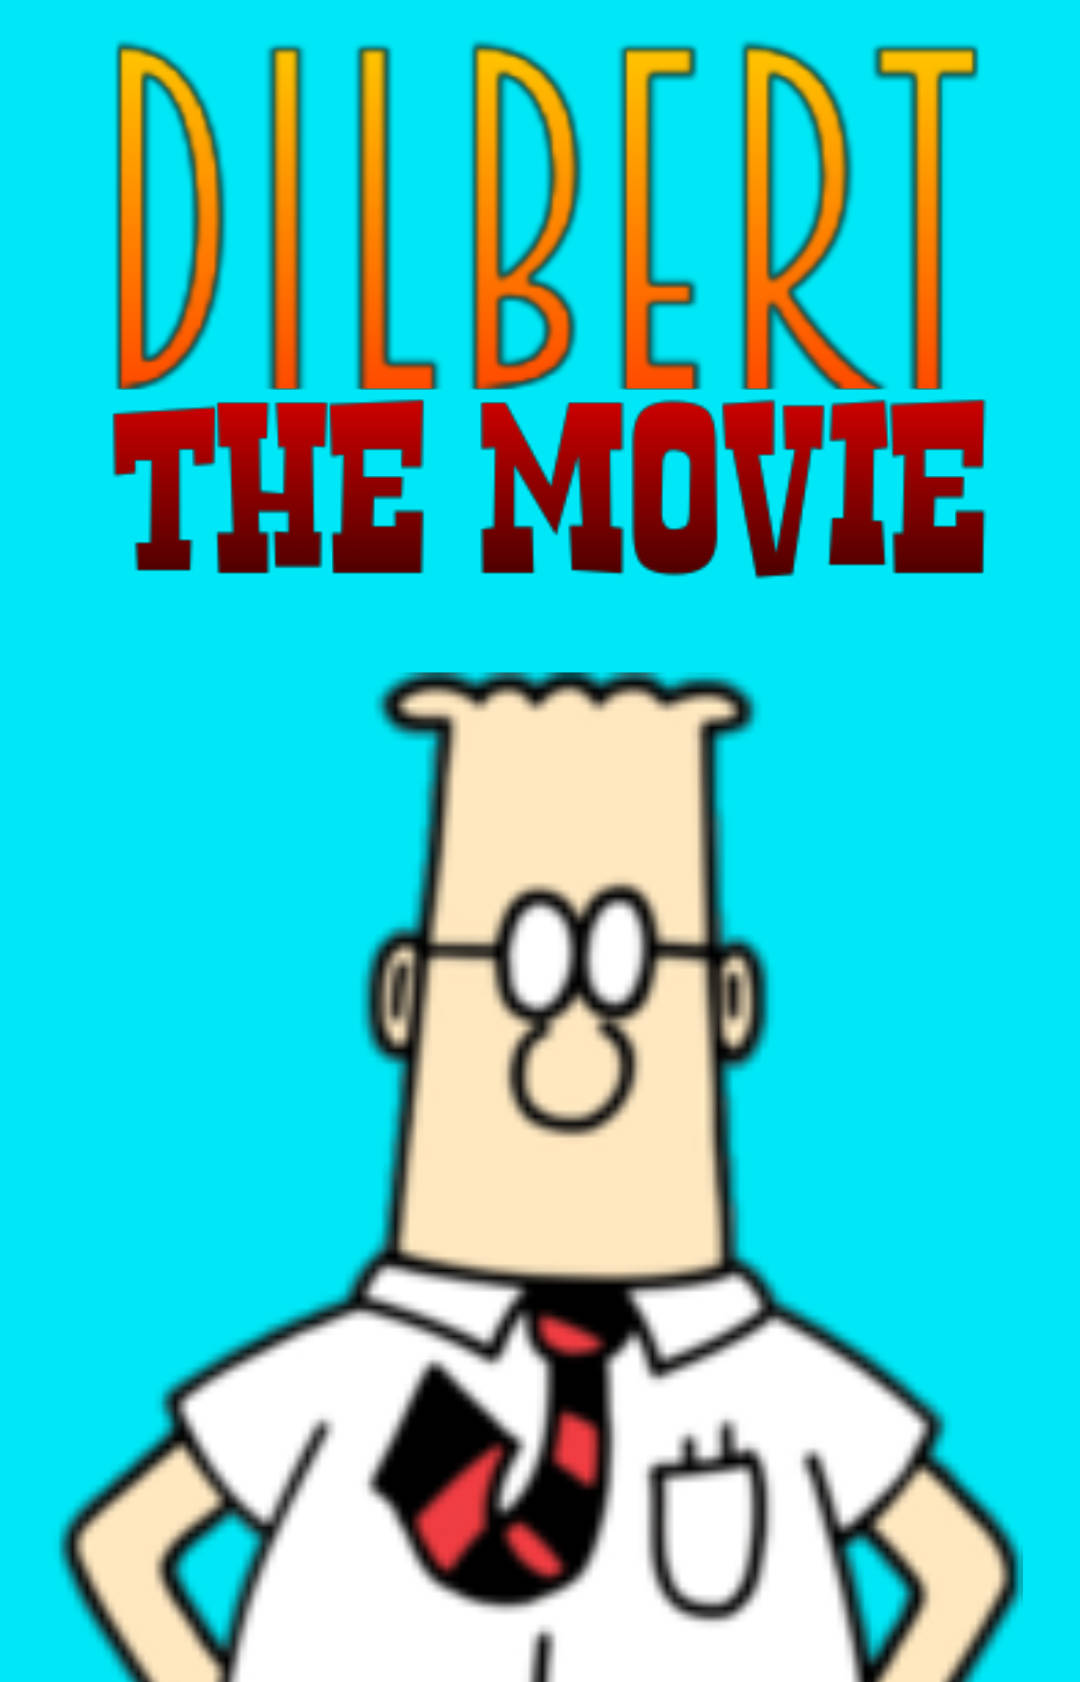 Dilbertfilmplakat Wallpaper